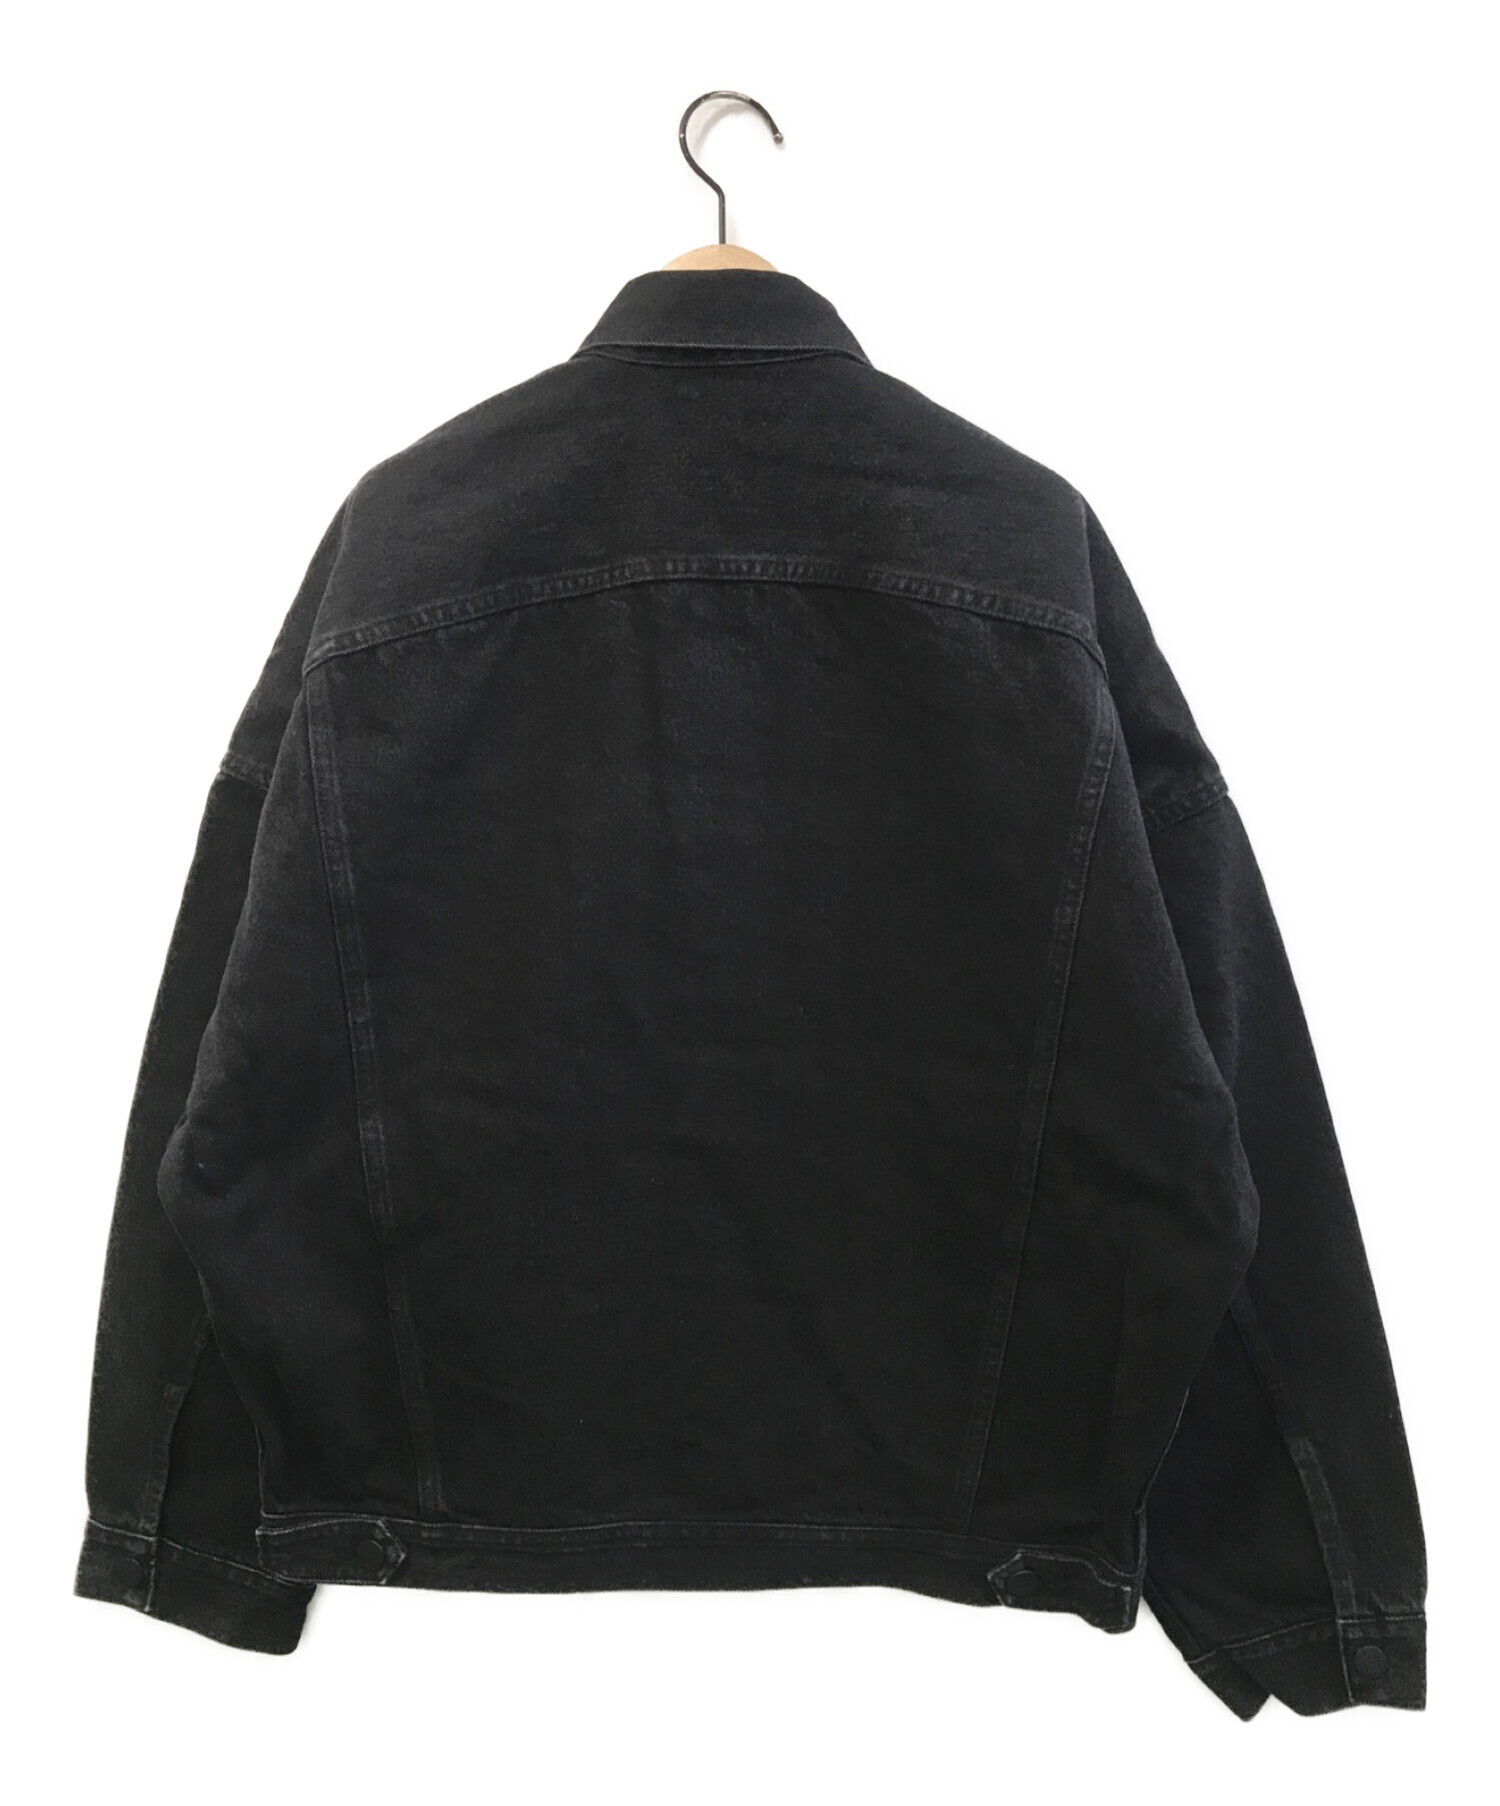 AP STUDIO (エーピーストゥディオ) ブラックオーバーサイズデニムジャケット ブラック サイズ:F 未使用品